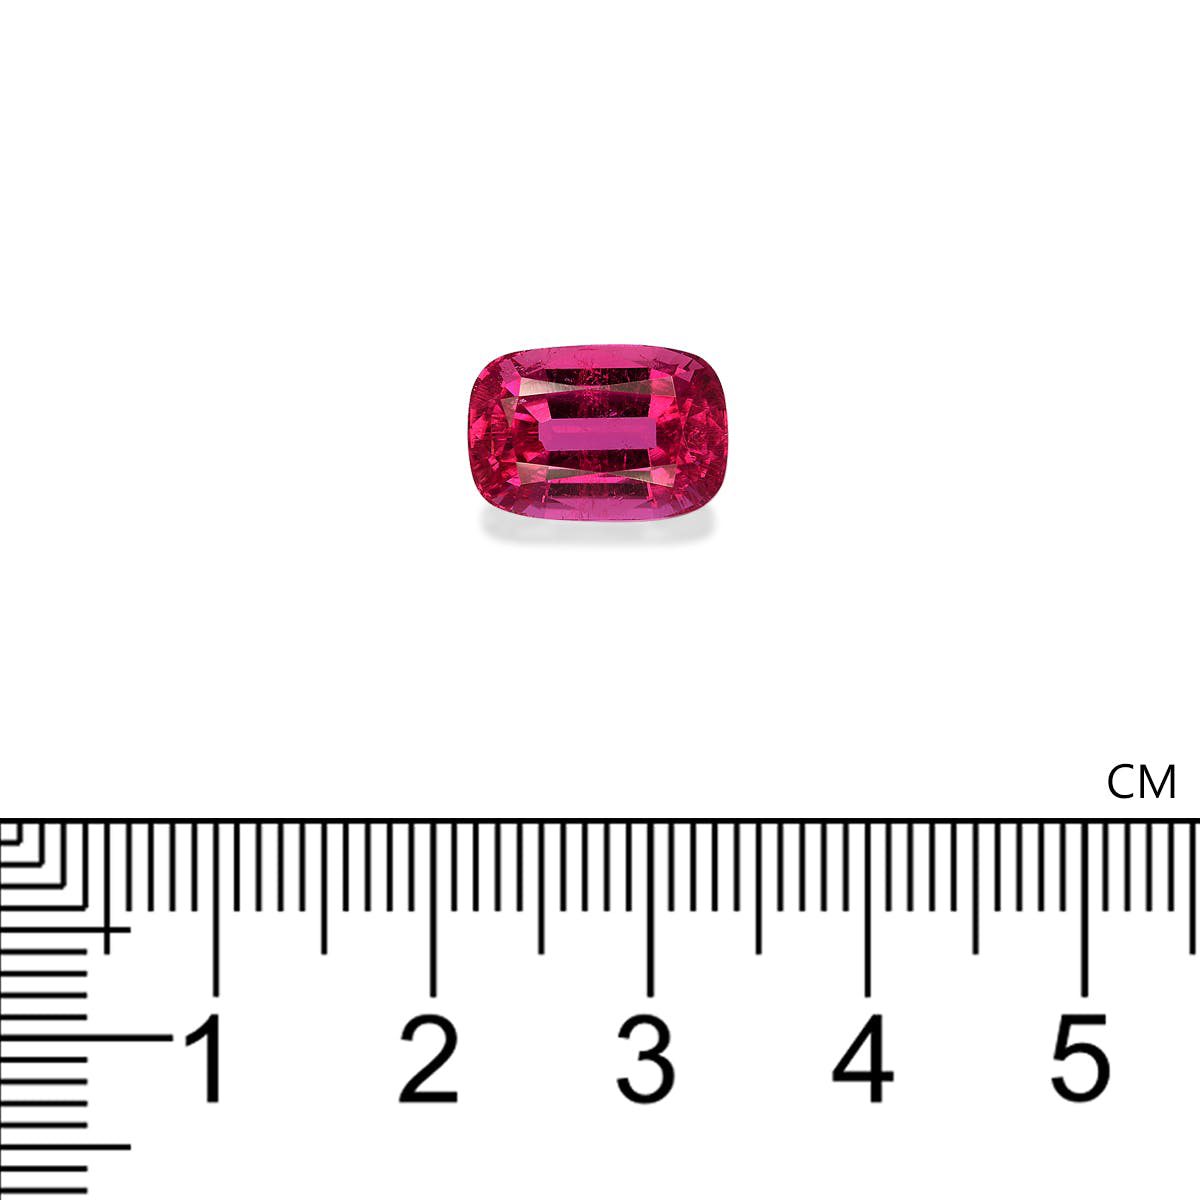 Picture of Vivid Pink Rubellite Tourmaline 5.37ct (RL1226)